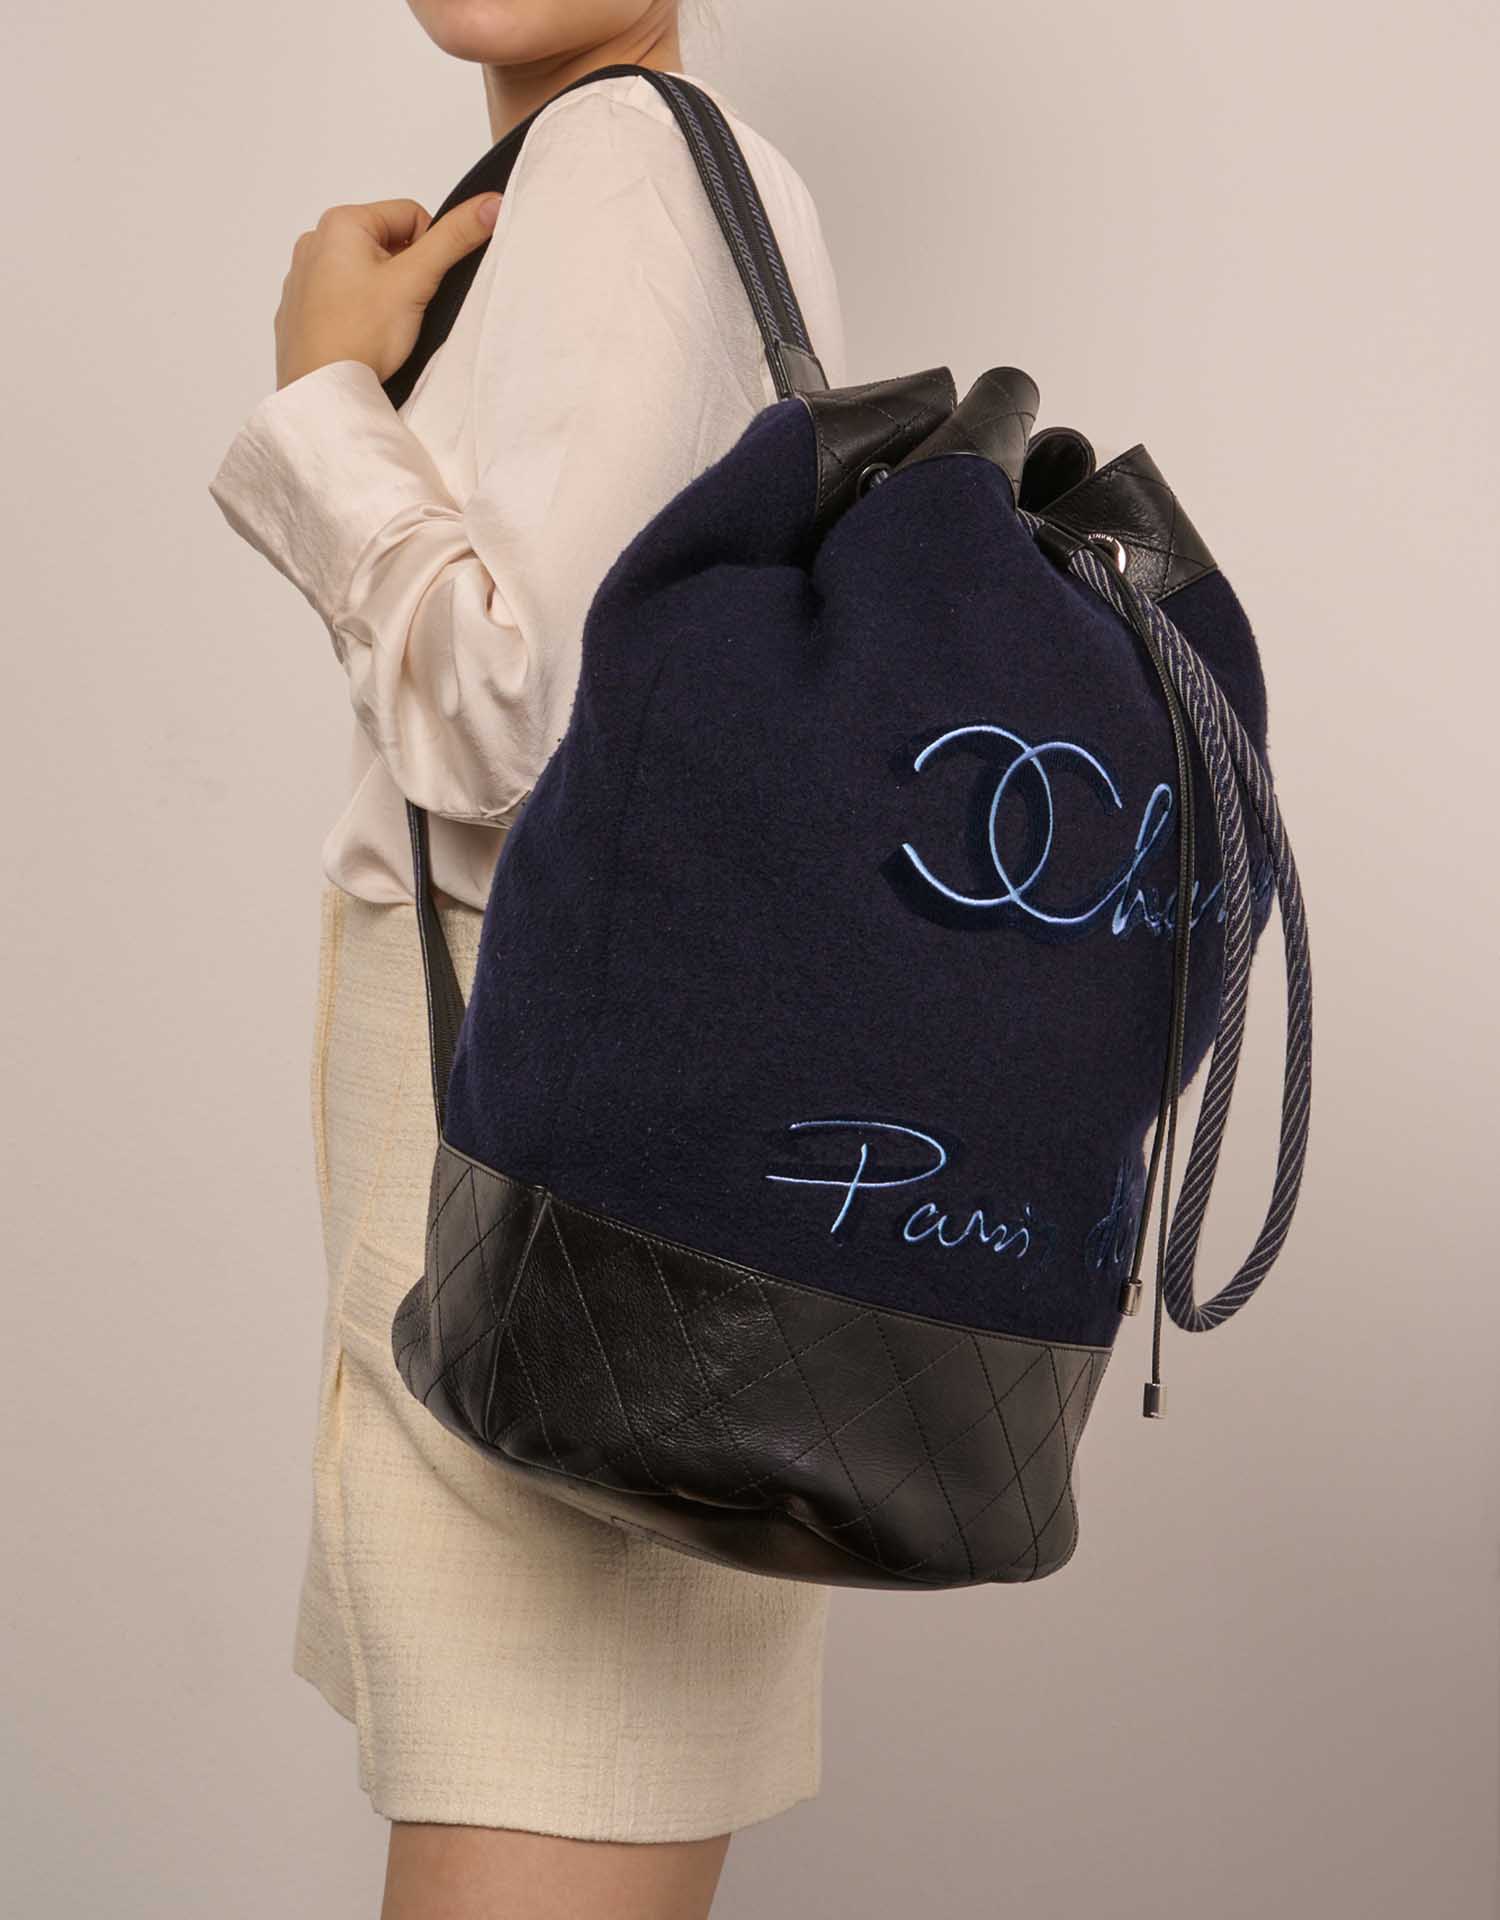 Chanel Backpack Blue-Black Sizes Worn | Sell your designer bag on Saclab.com